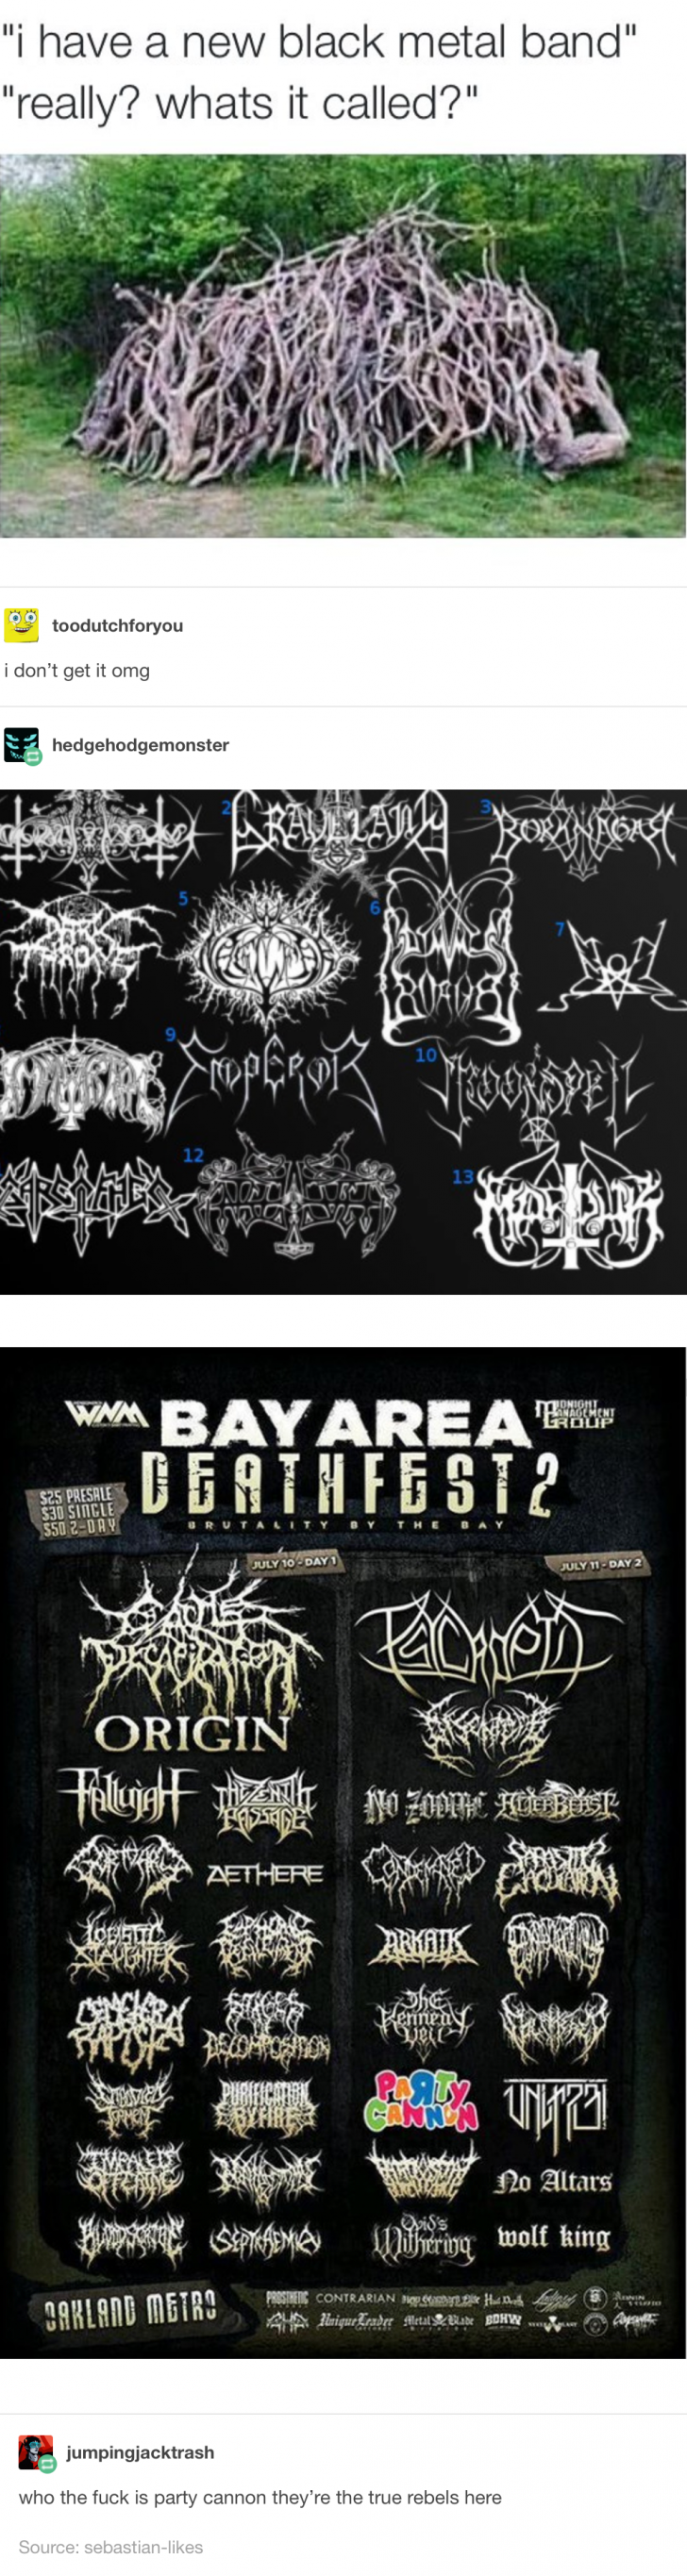 Death metal bands